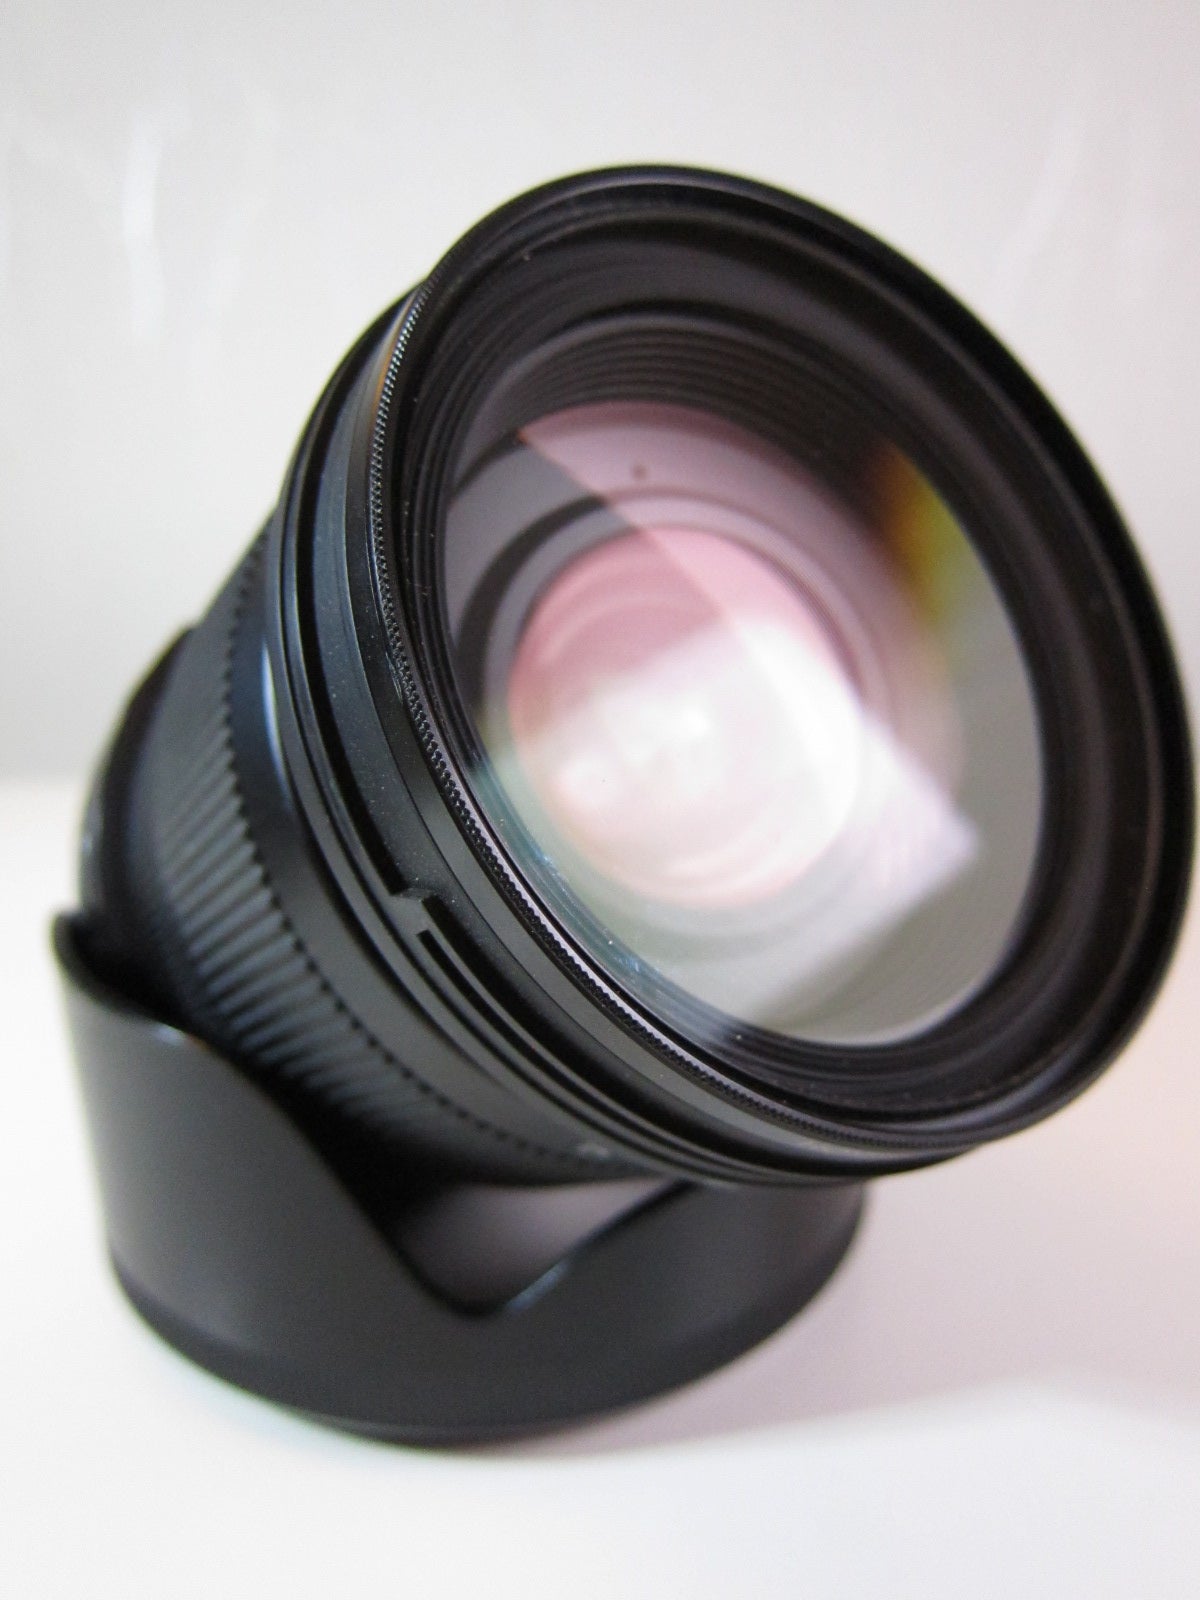 Sigma all-around objektiv for Nikon, Sigma, AF 24-105/4 DG